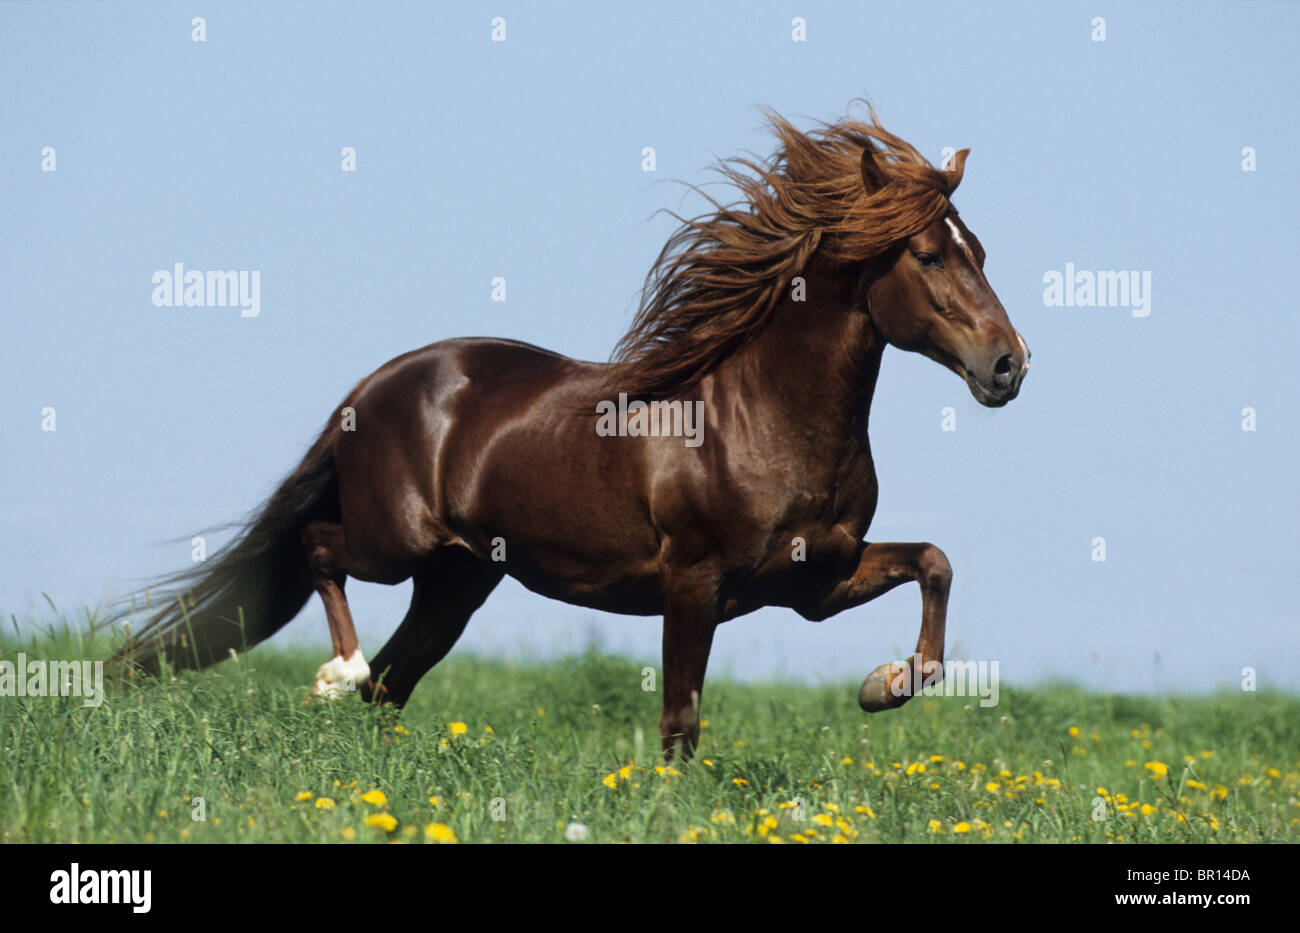 Paso Peruano (Equus ferus caballus), stallion trotting on a meadow. Stock Photo